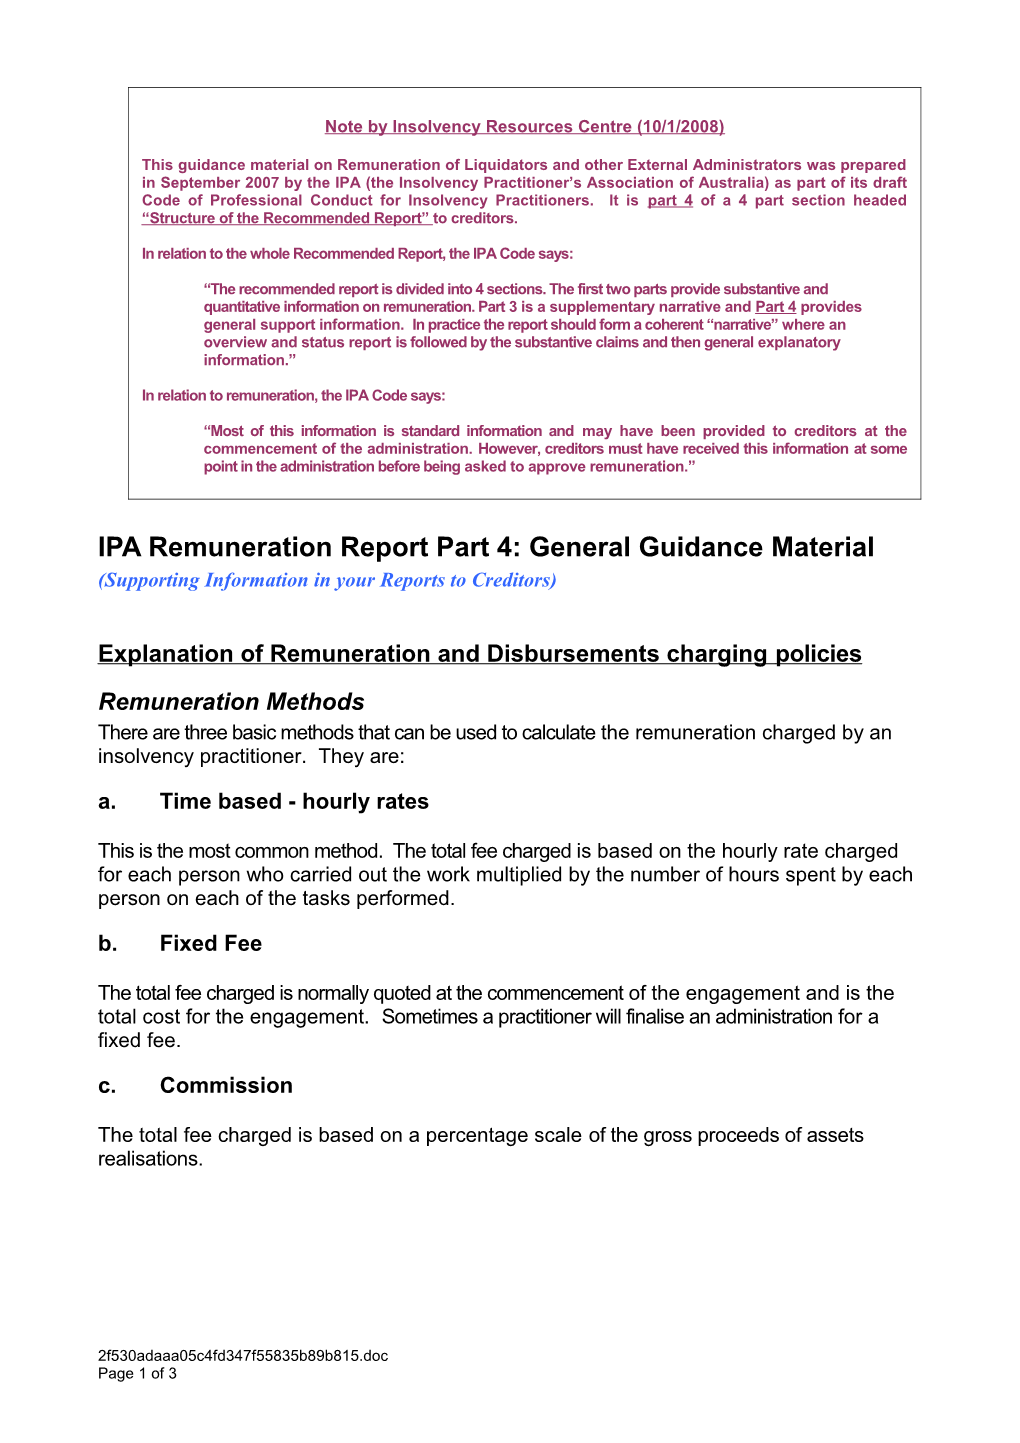 IPA Remuneration Report Part 4: General Guidance Material